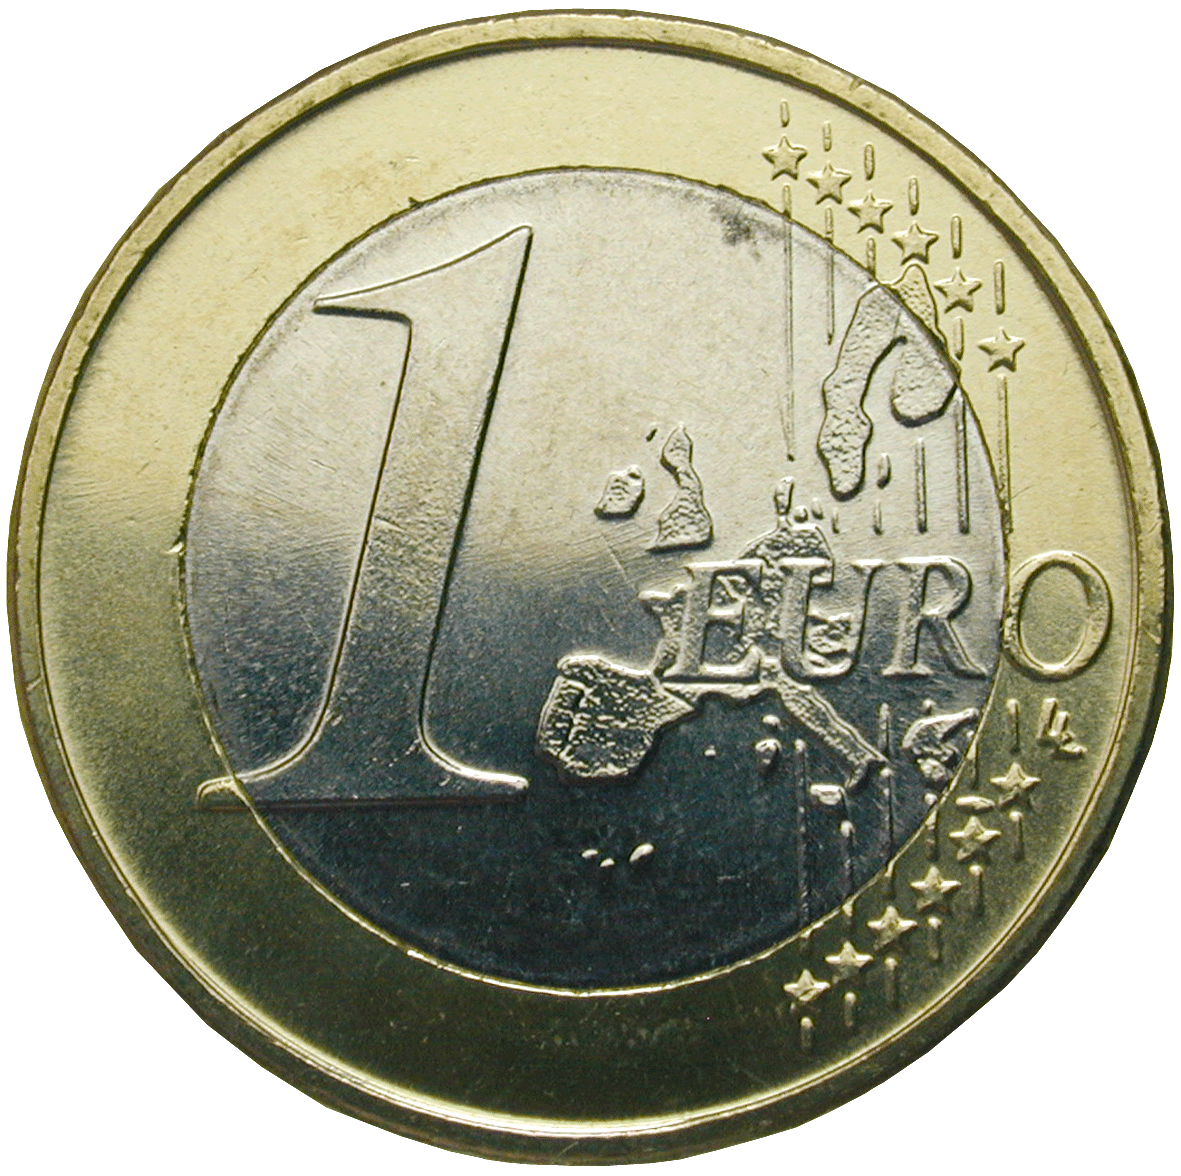 Republik Griechenland, 1 Euro 2002 (reverse)